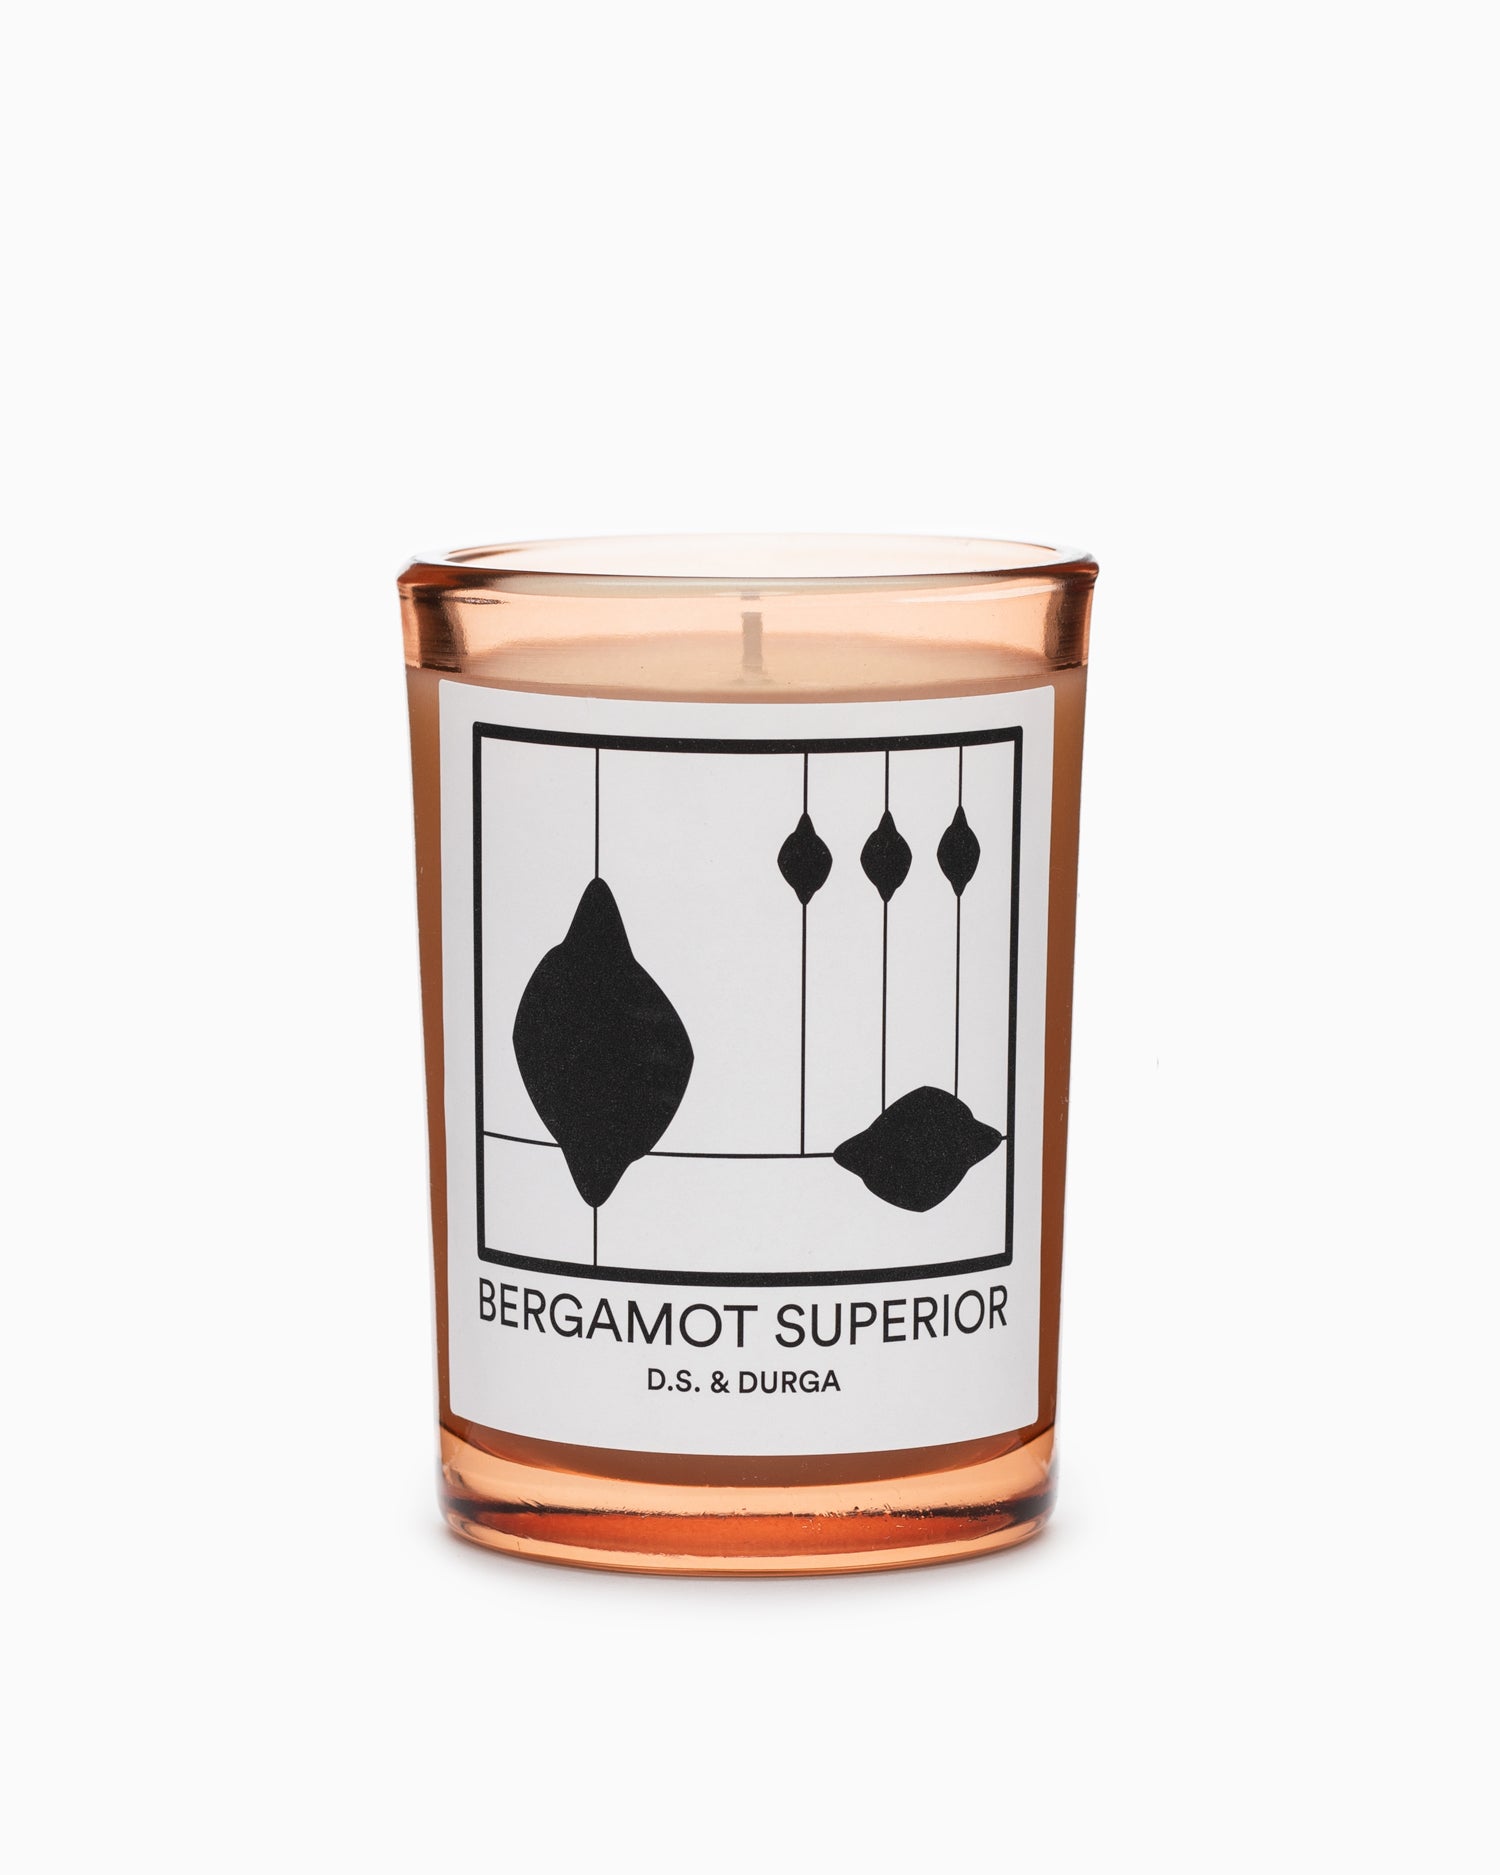 Bergamot Superior Candle - D.S. & Durga